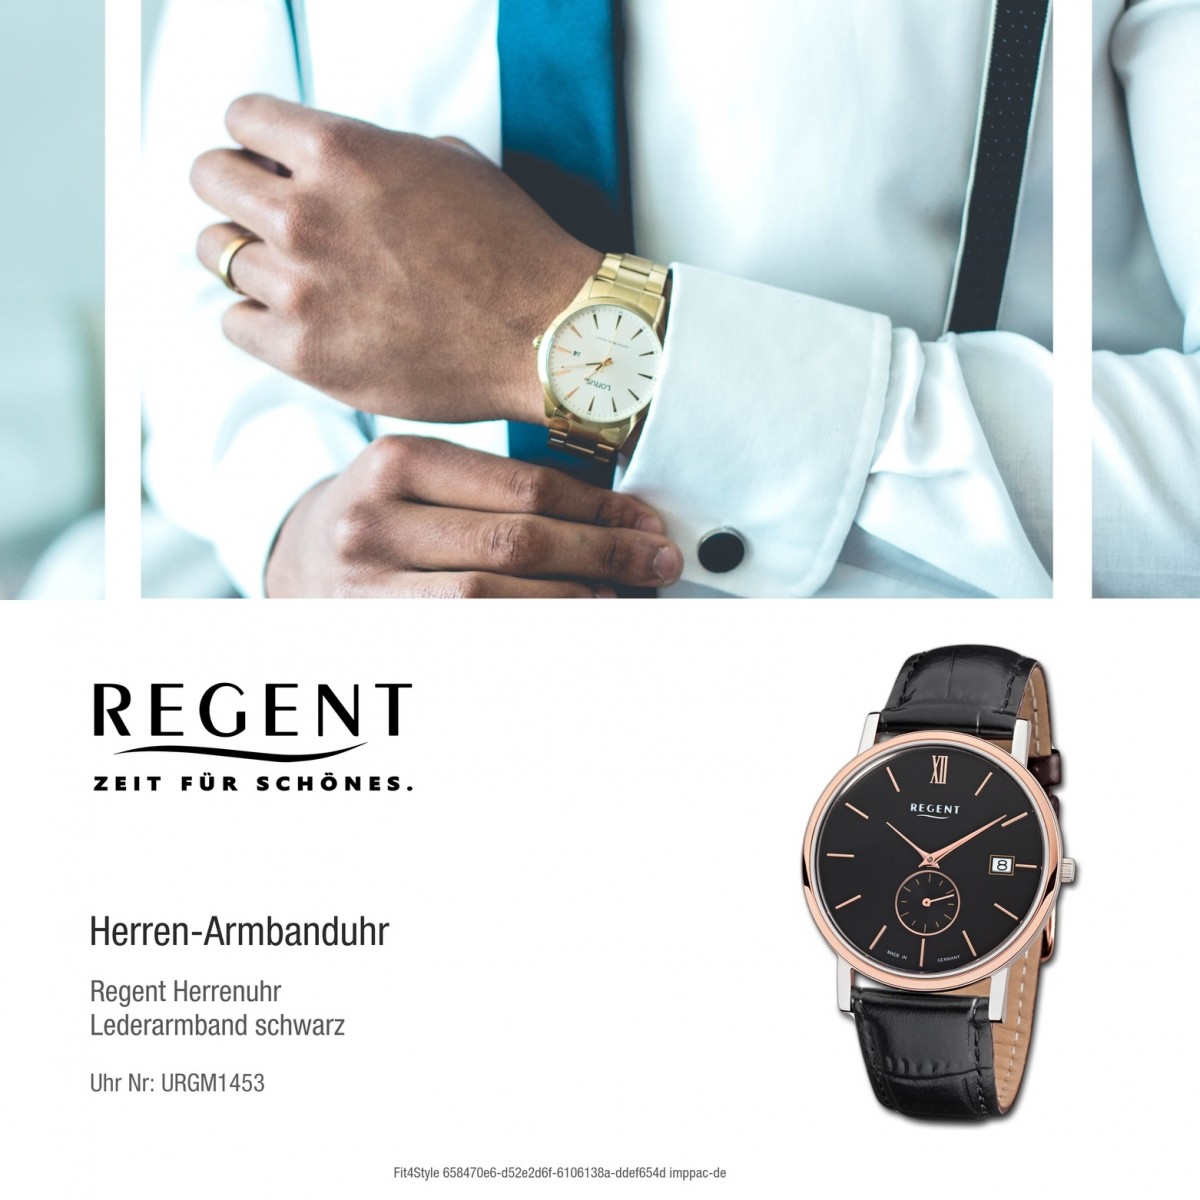 Herren-Armbanduhr Leder-Armband URGM1453 Quarz-Uhr Regent Uhr schwarz